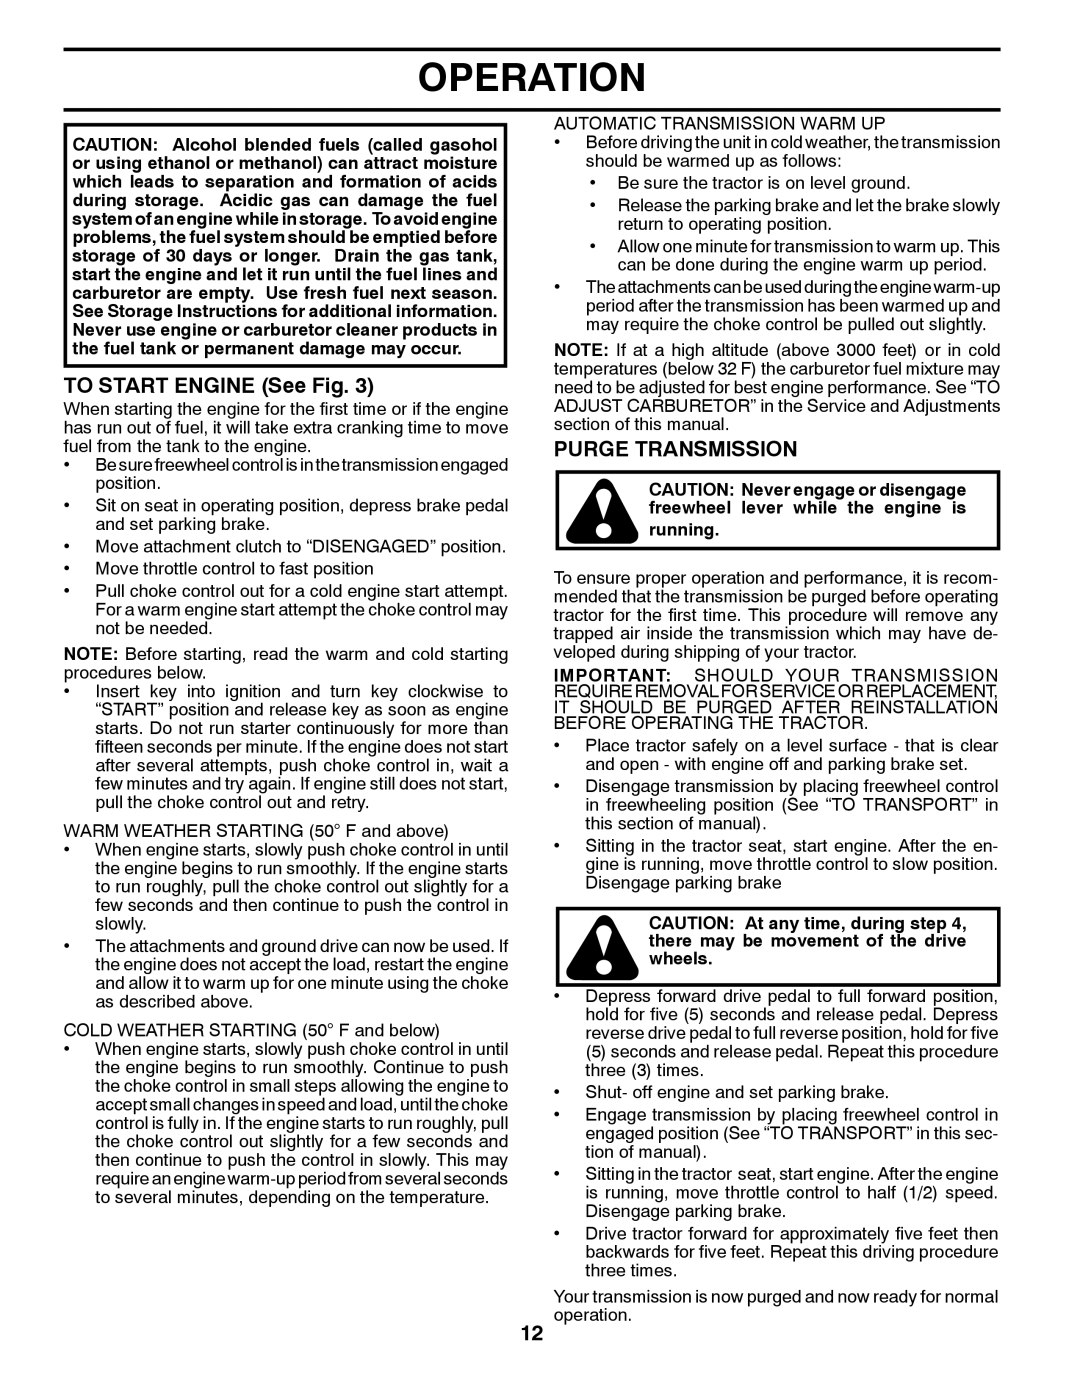 Husqvarna YTH2246 owner manual TO START ENGINE See Fig, Purge Transmission, Operation, running 